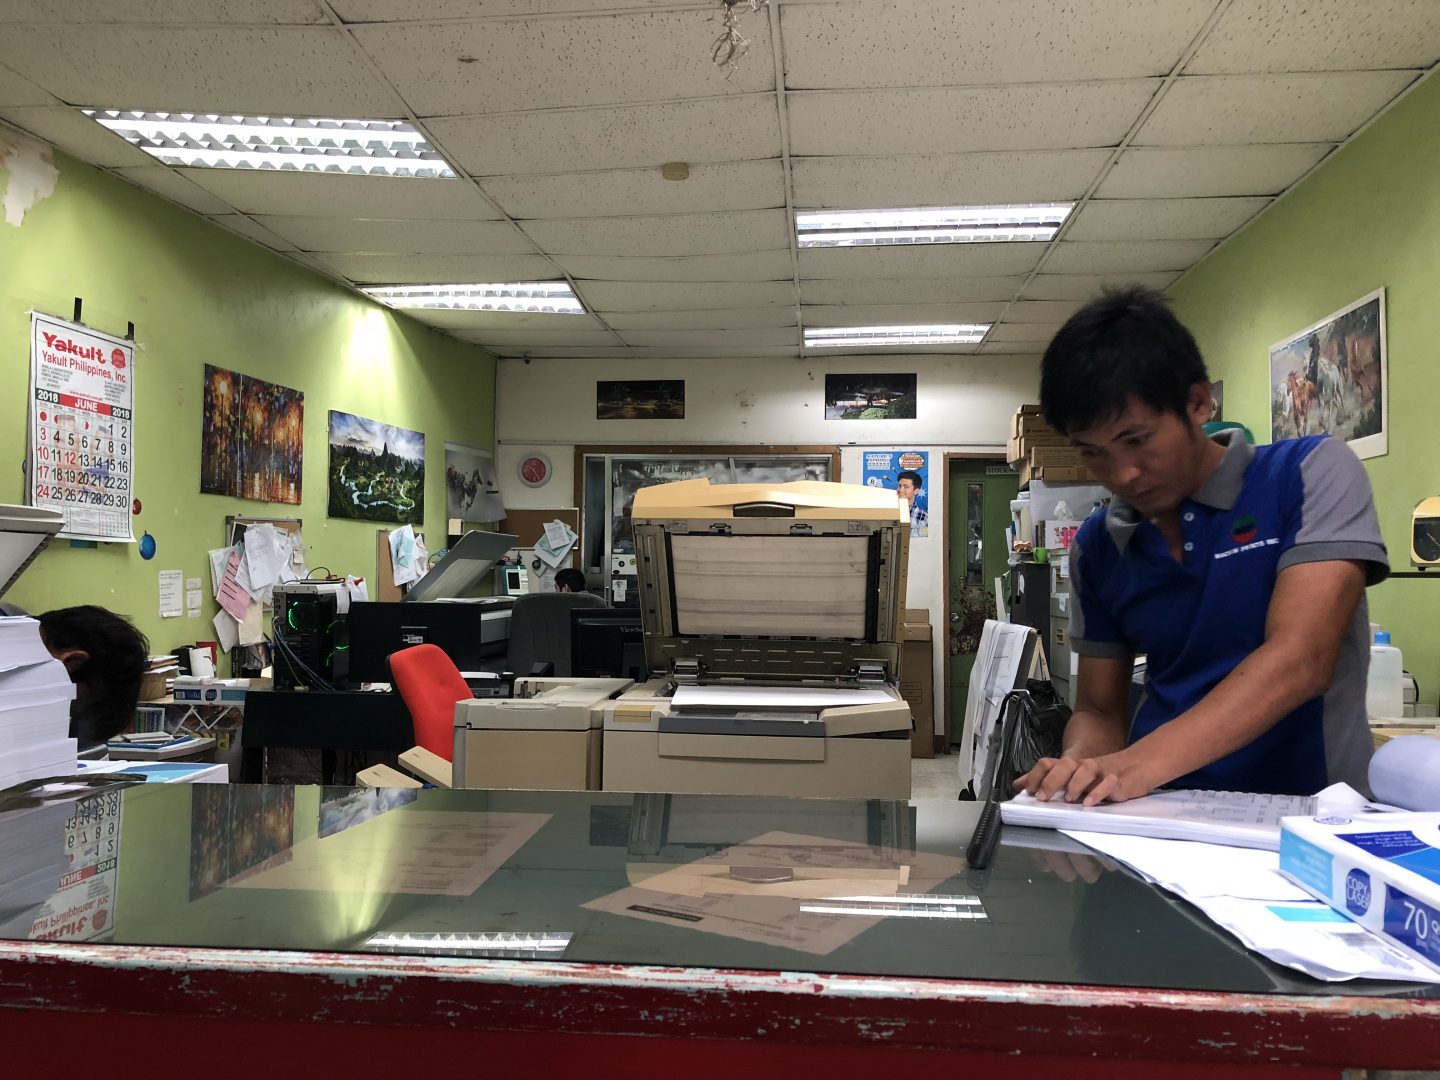 Print Shop Near Thailand Embassy in Manila